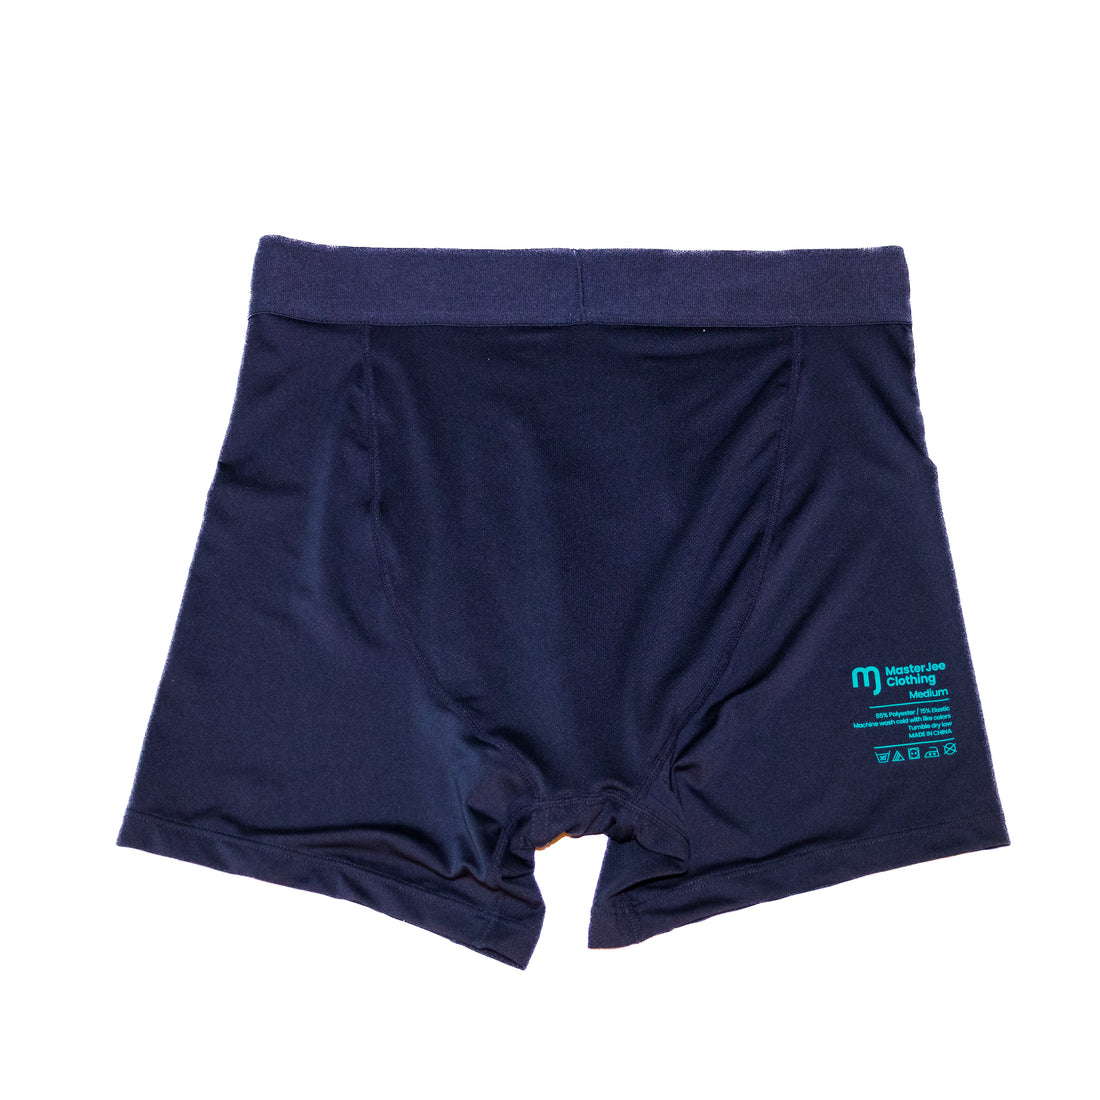 Sweat Proof Boxer Shorts Grey / Navy Blue